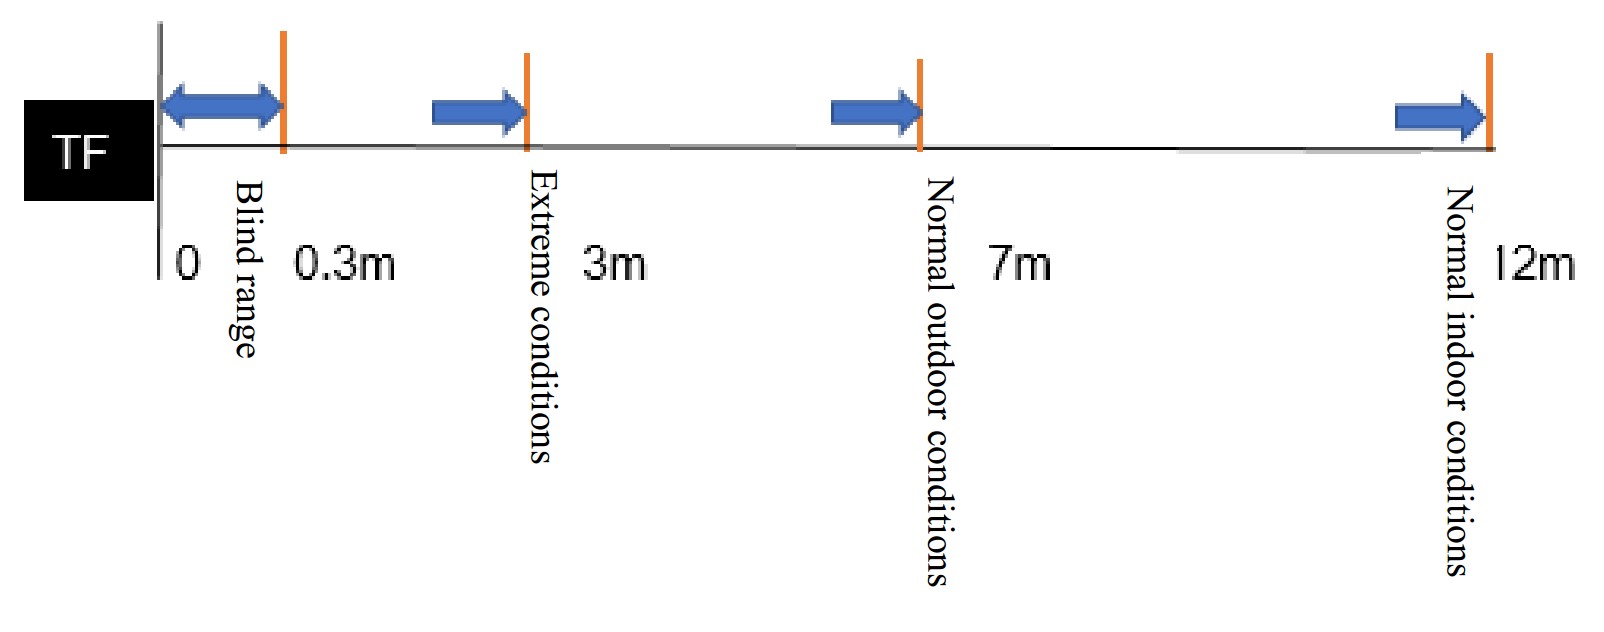 TFmini-S ToF Single-Point solid-state lidar Measurement range schematic diagram